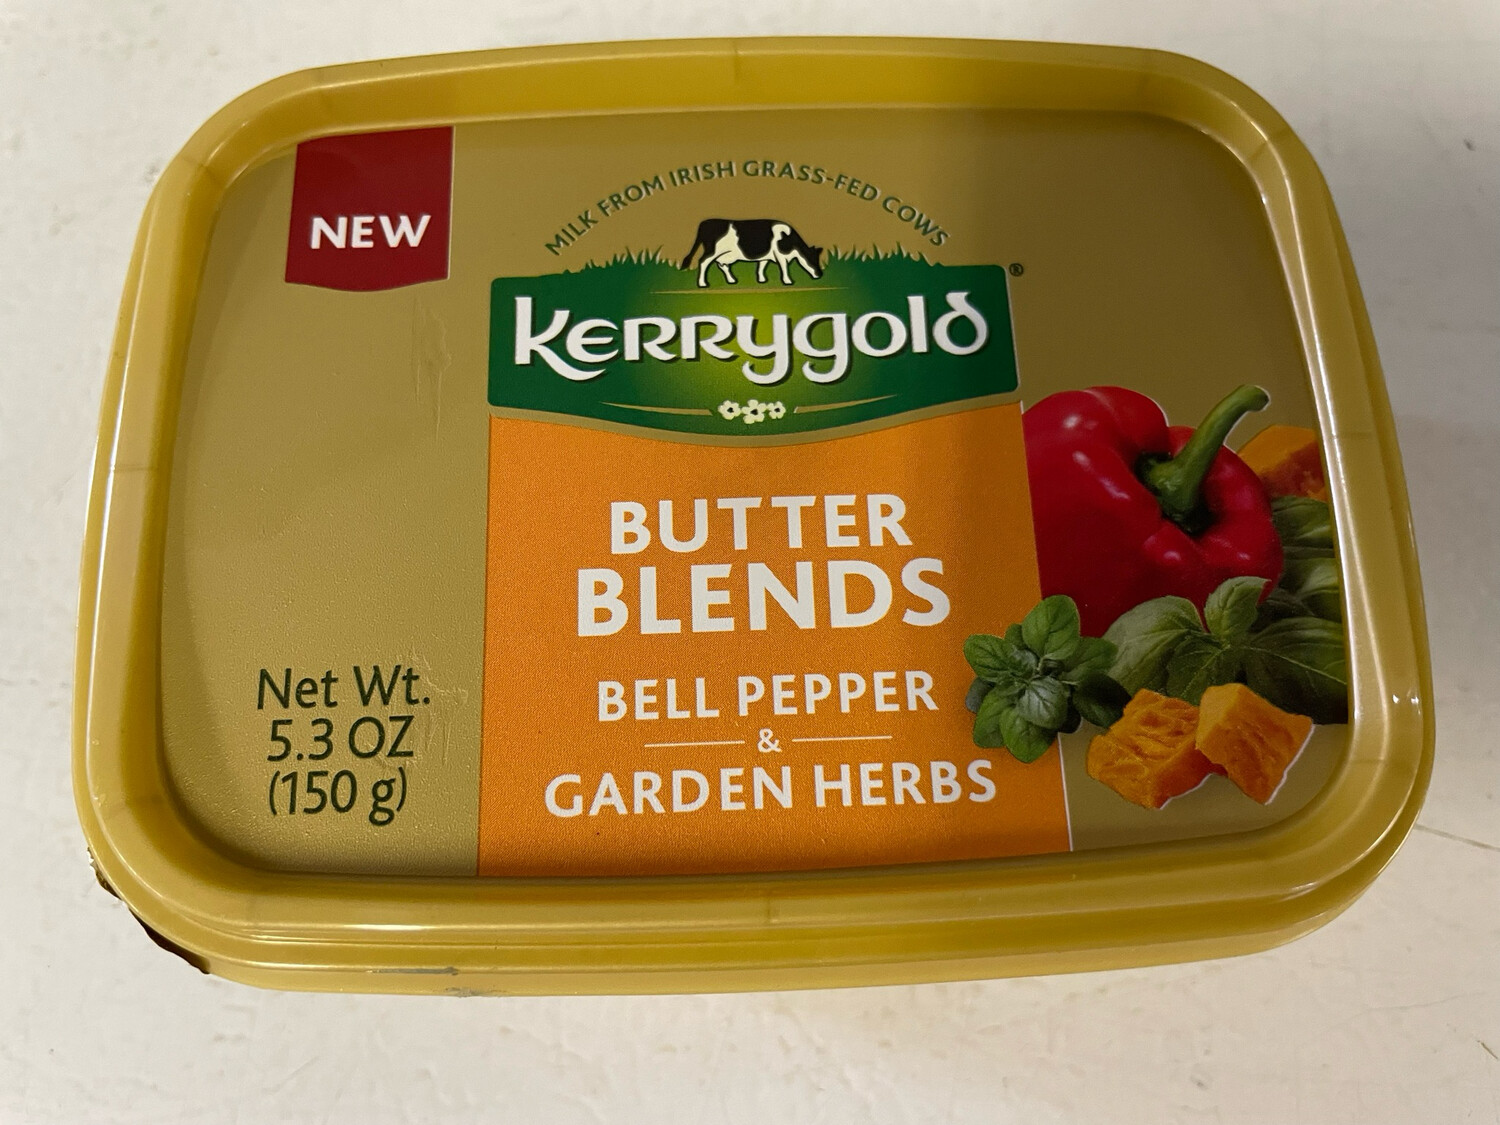 Kerrygold Butter Blend
(*LIMIT 1 per household*)